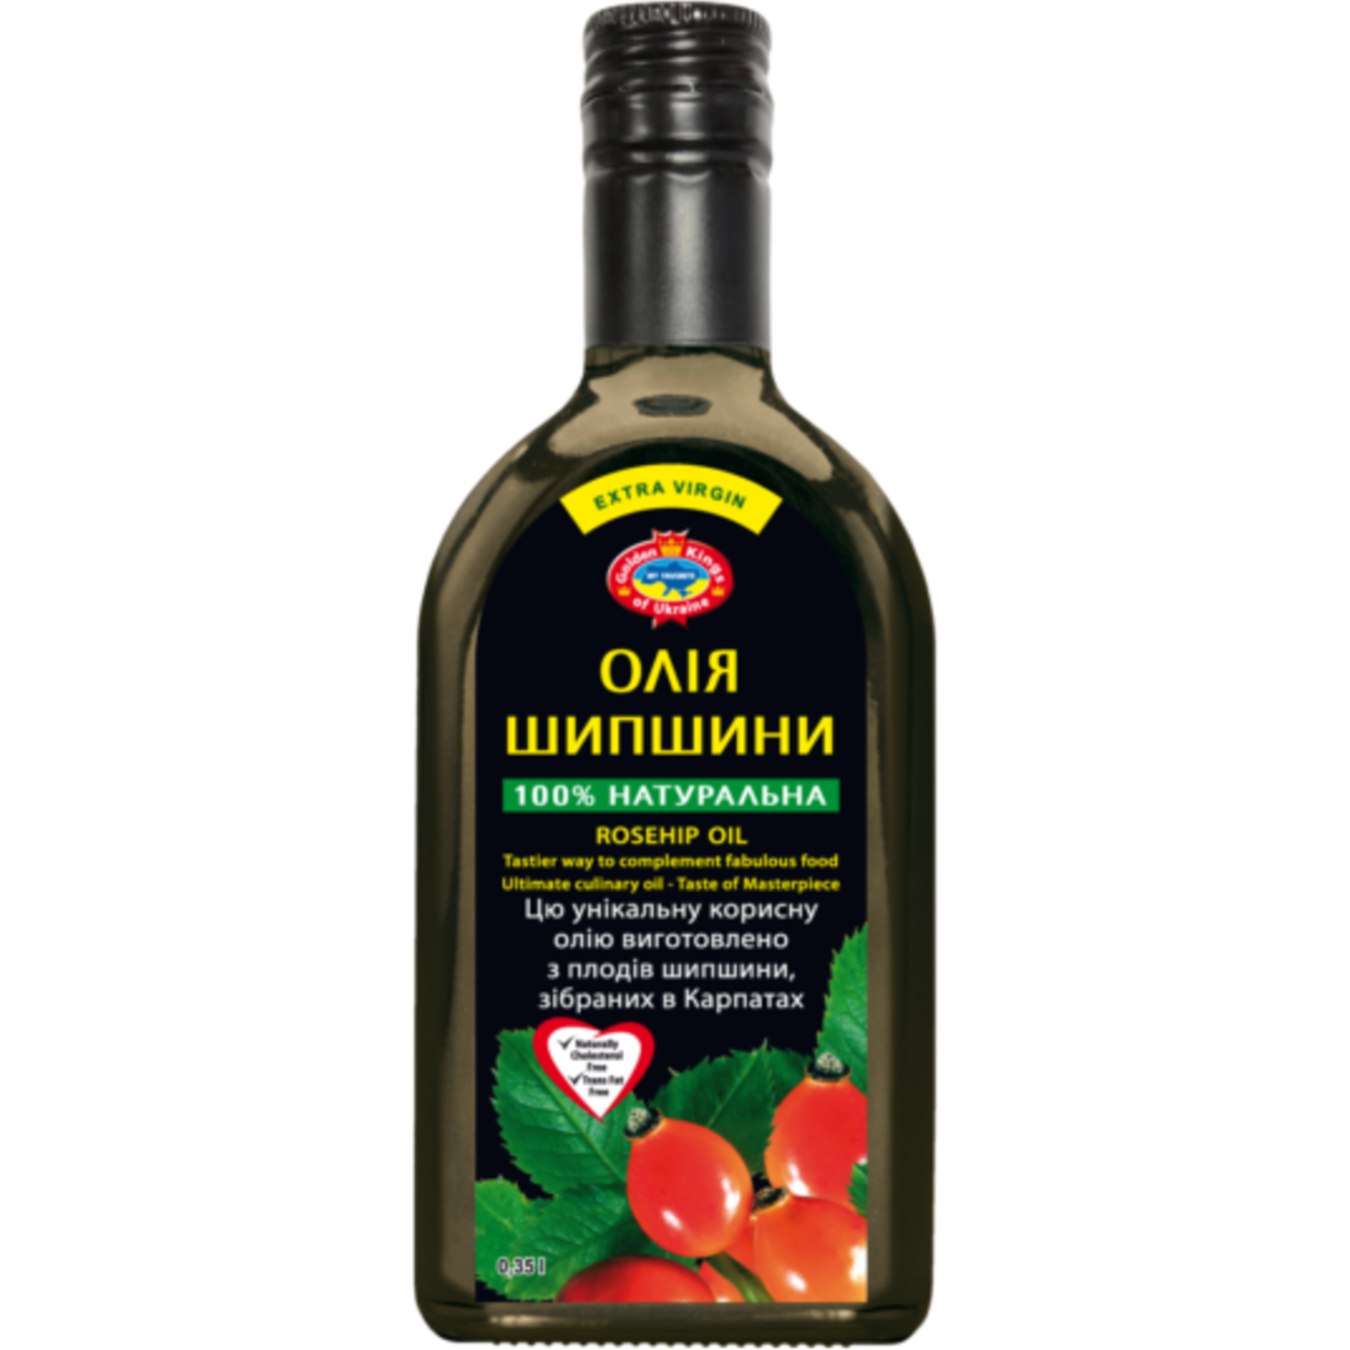 Golden Kings of Ukraine rose hip oil, unrefined, cold pressed, first pressed, 0.35 l 2